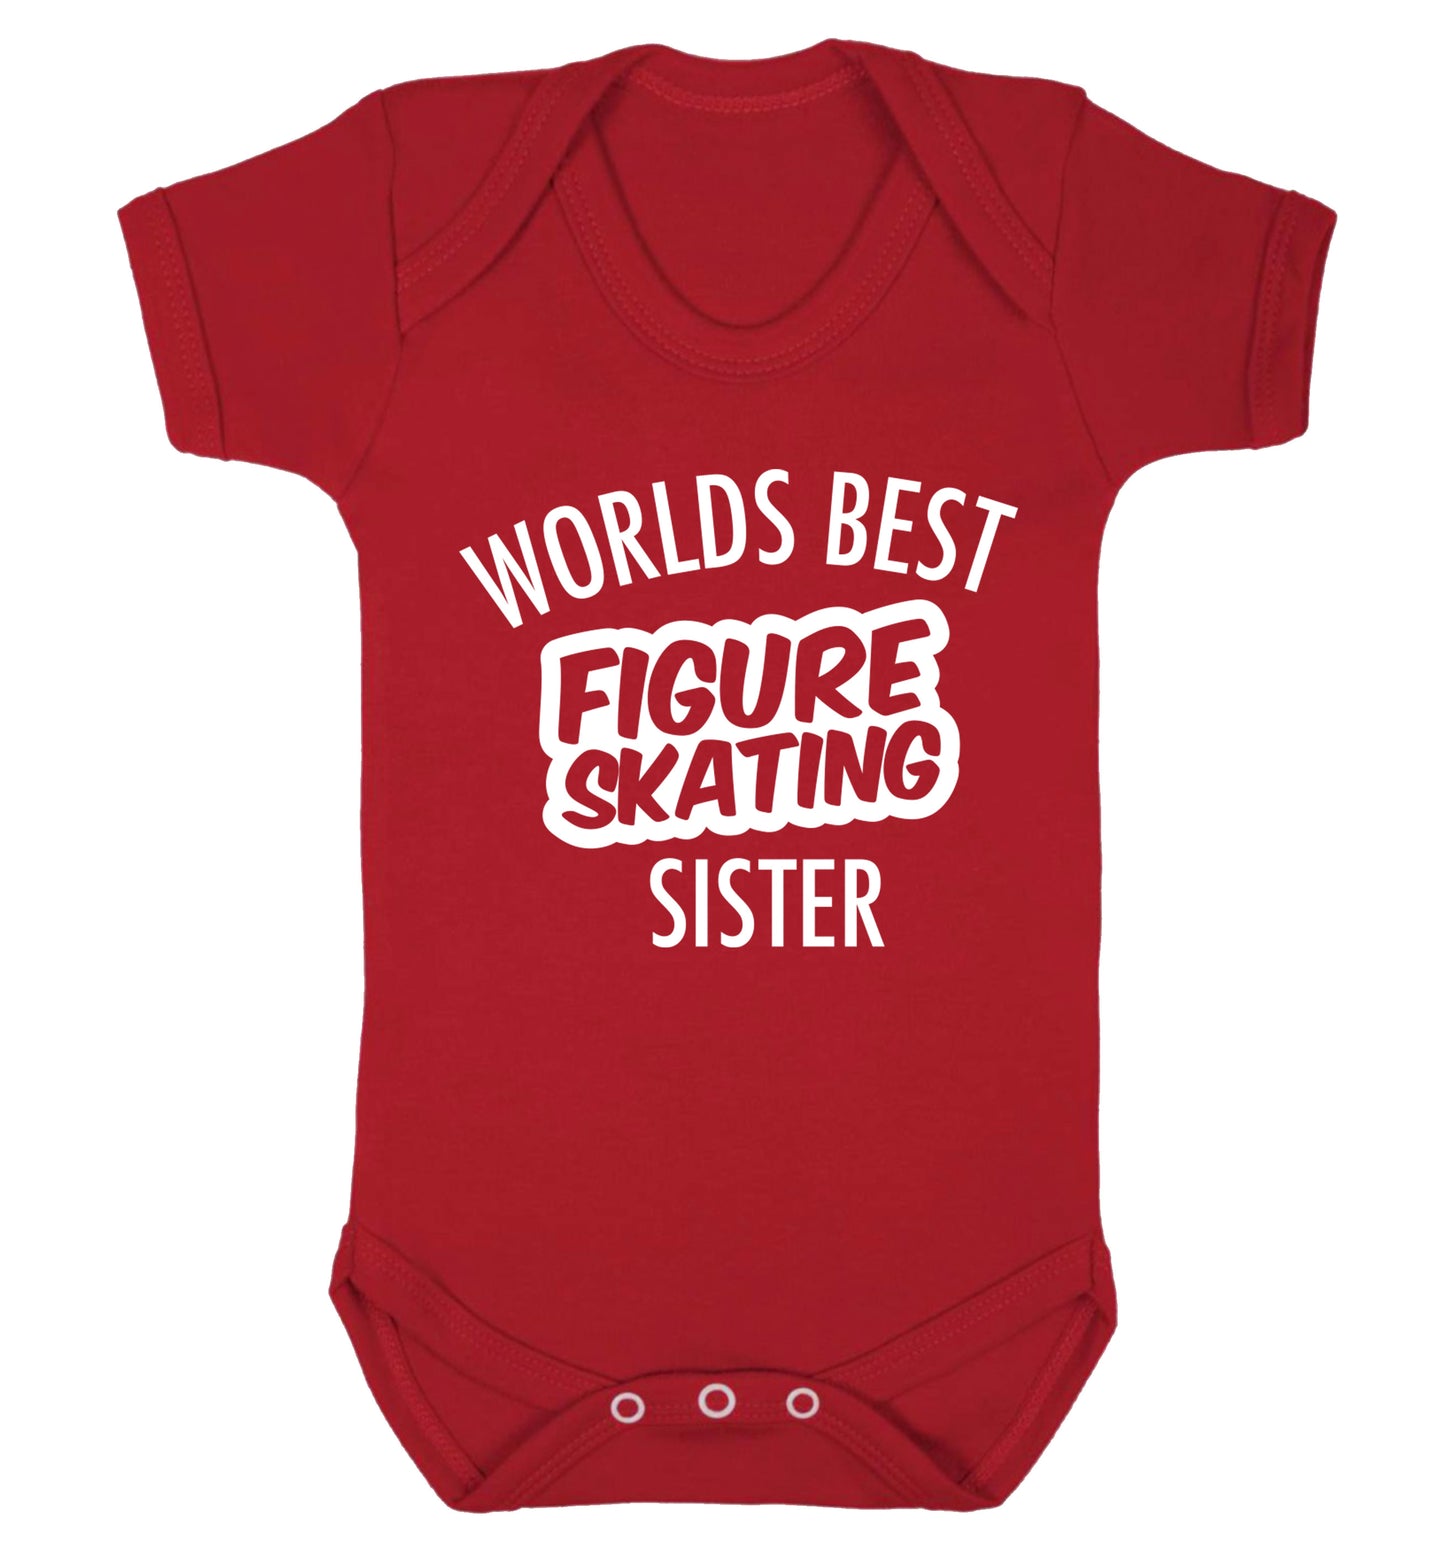 Worlds best figure skating sisterBaby Vest red 18-24 months